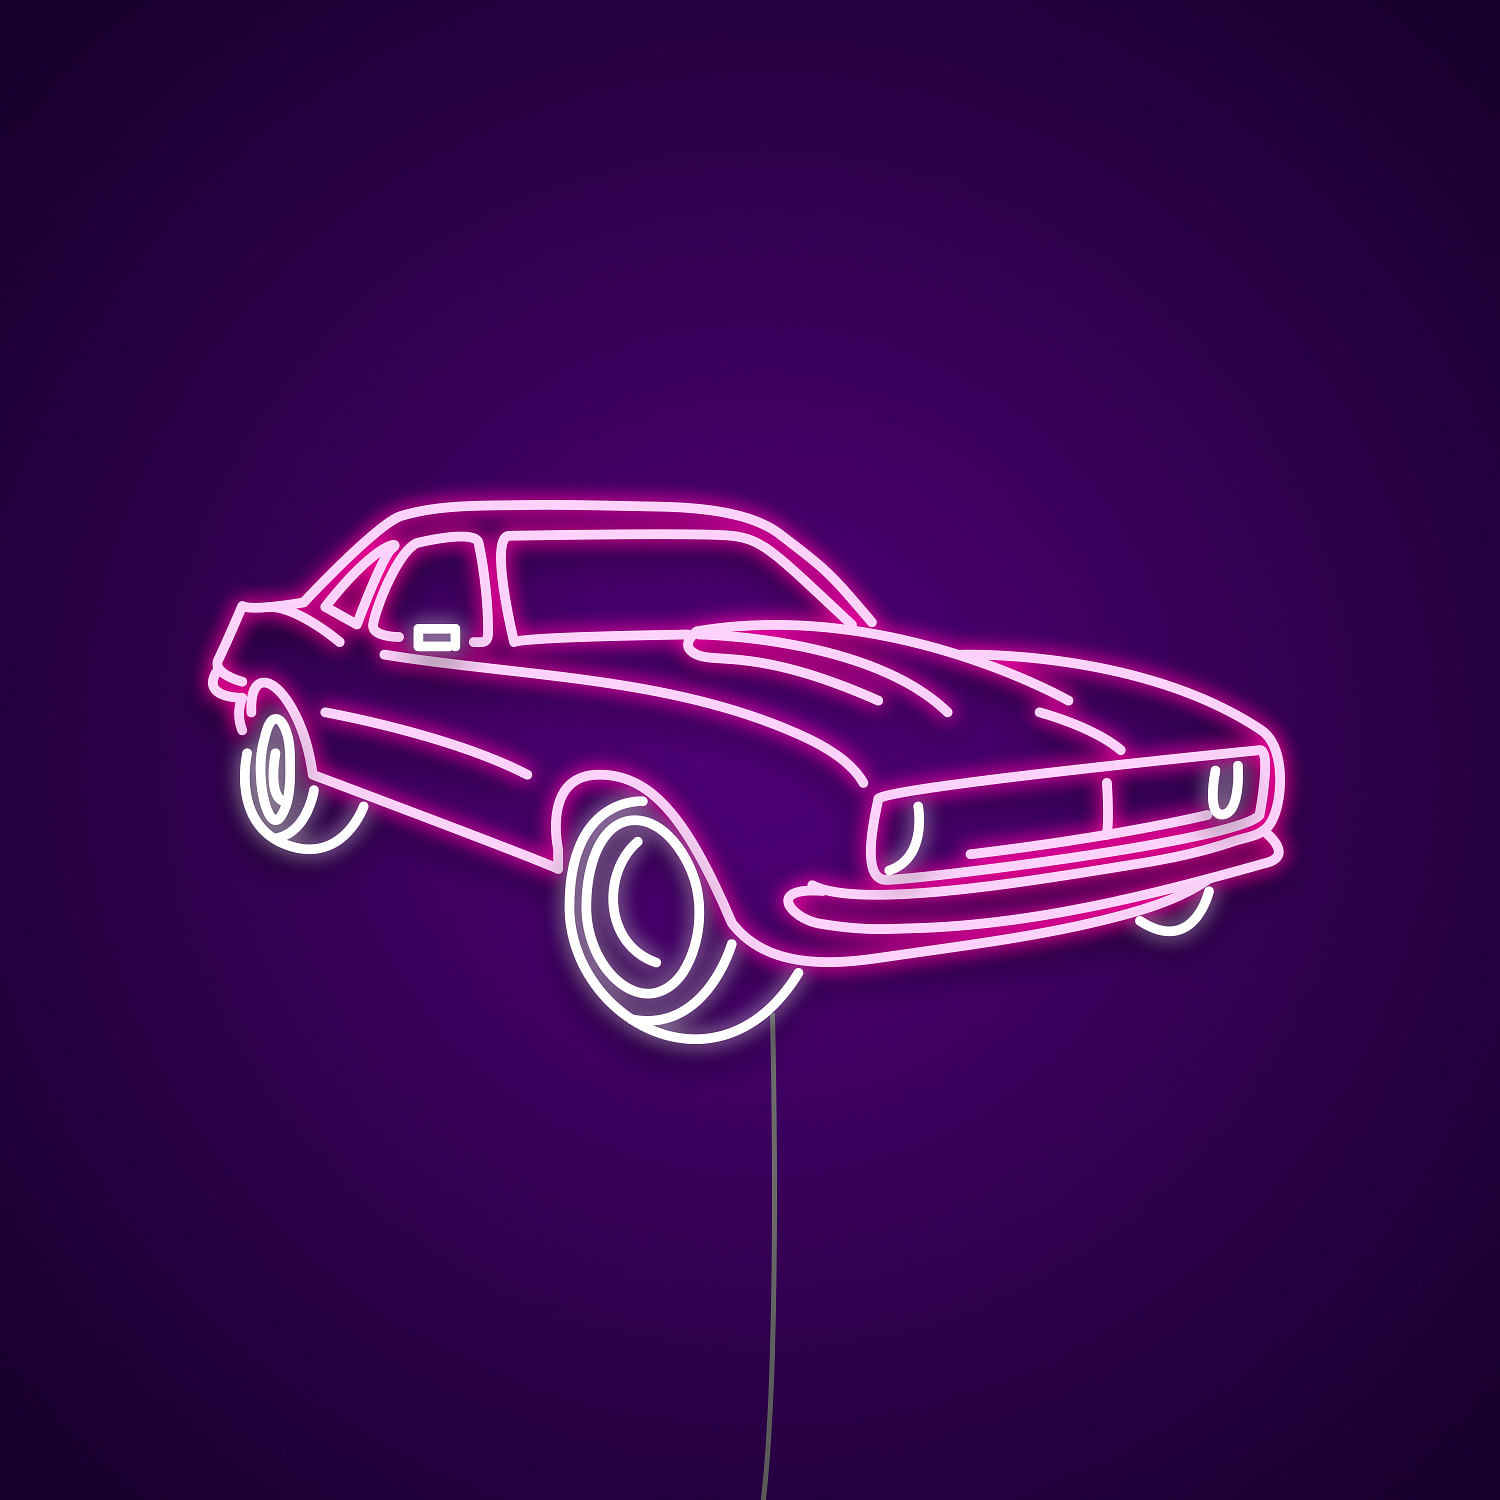 Mustang Car Neon Light Sign - Neonize